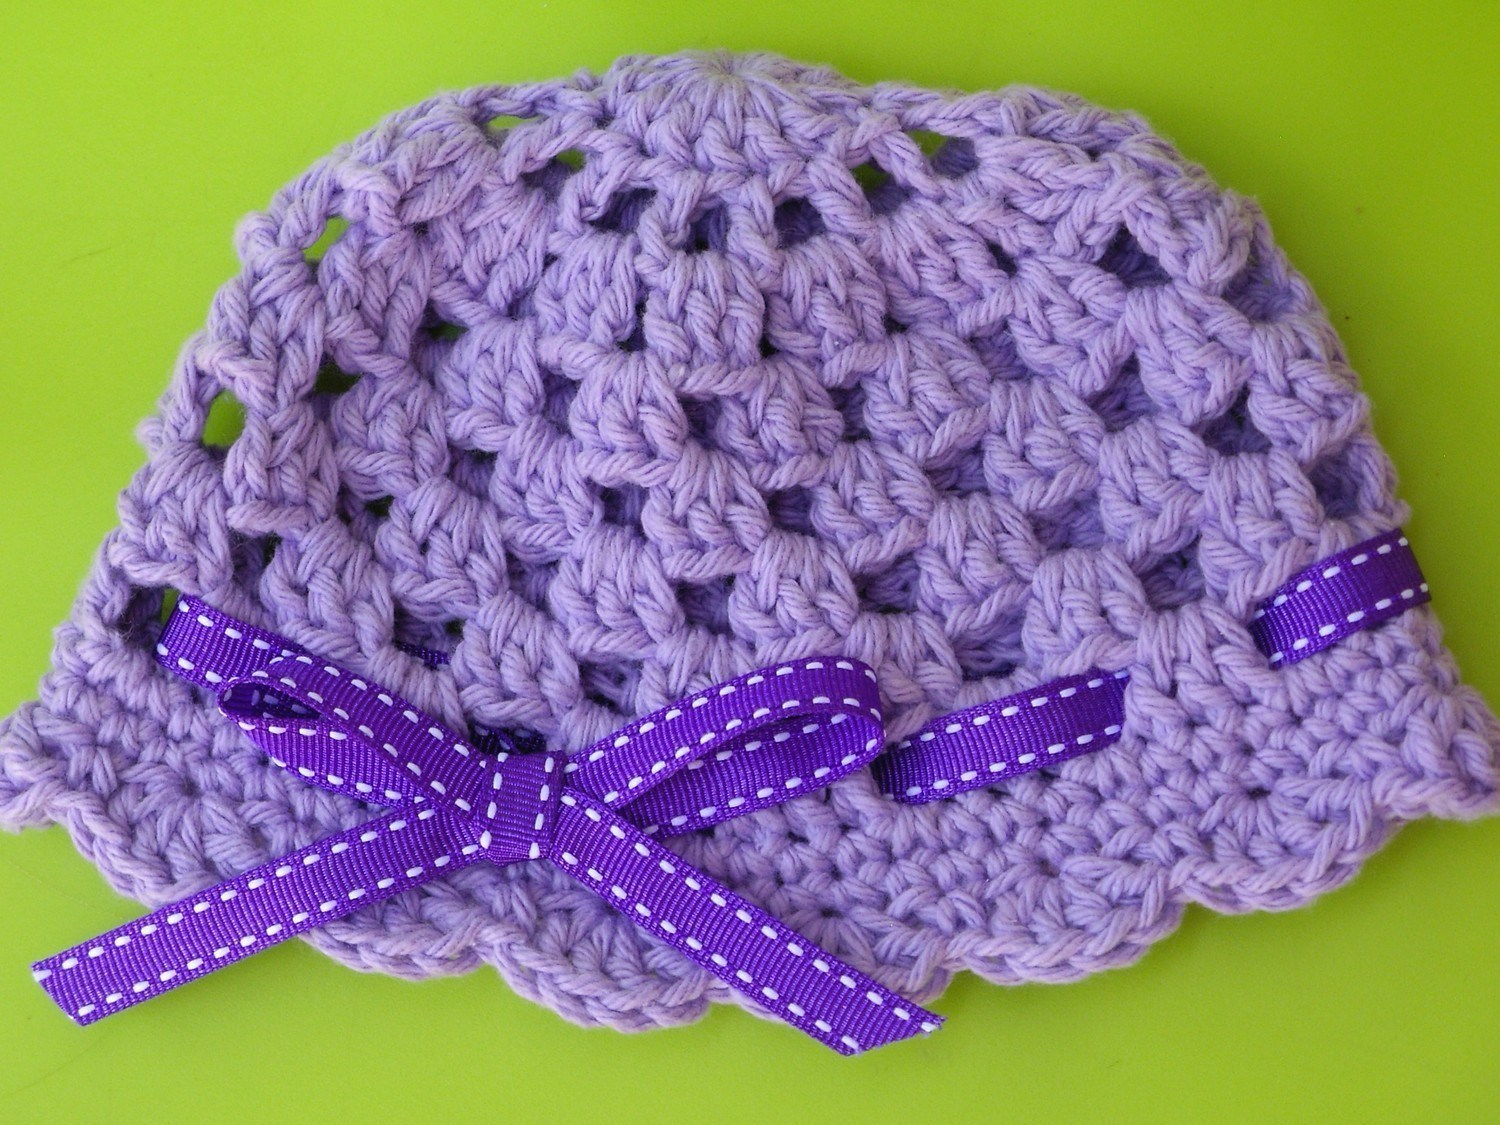 Easy Crochet Baby Hat Pattern Free And Easy Crochet Patterns For Beginners 2016 Ba Hat Litlestuff